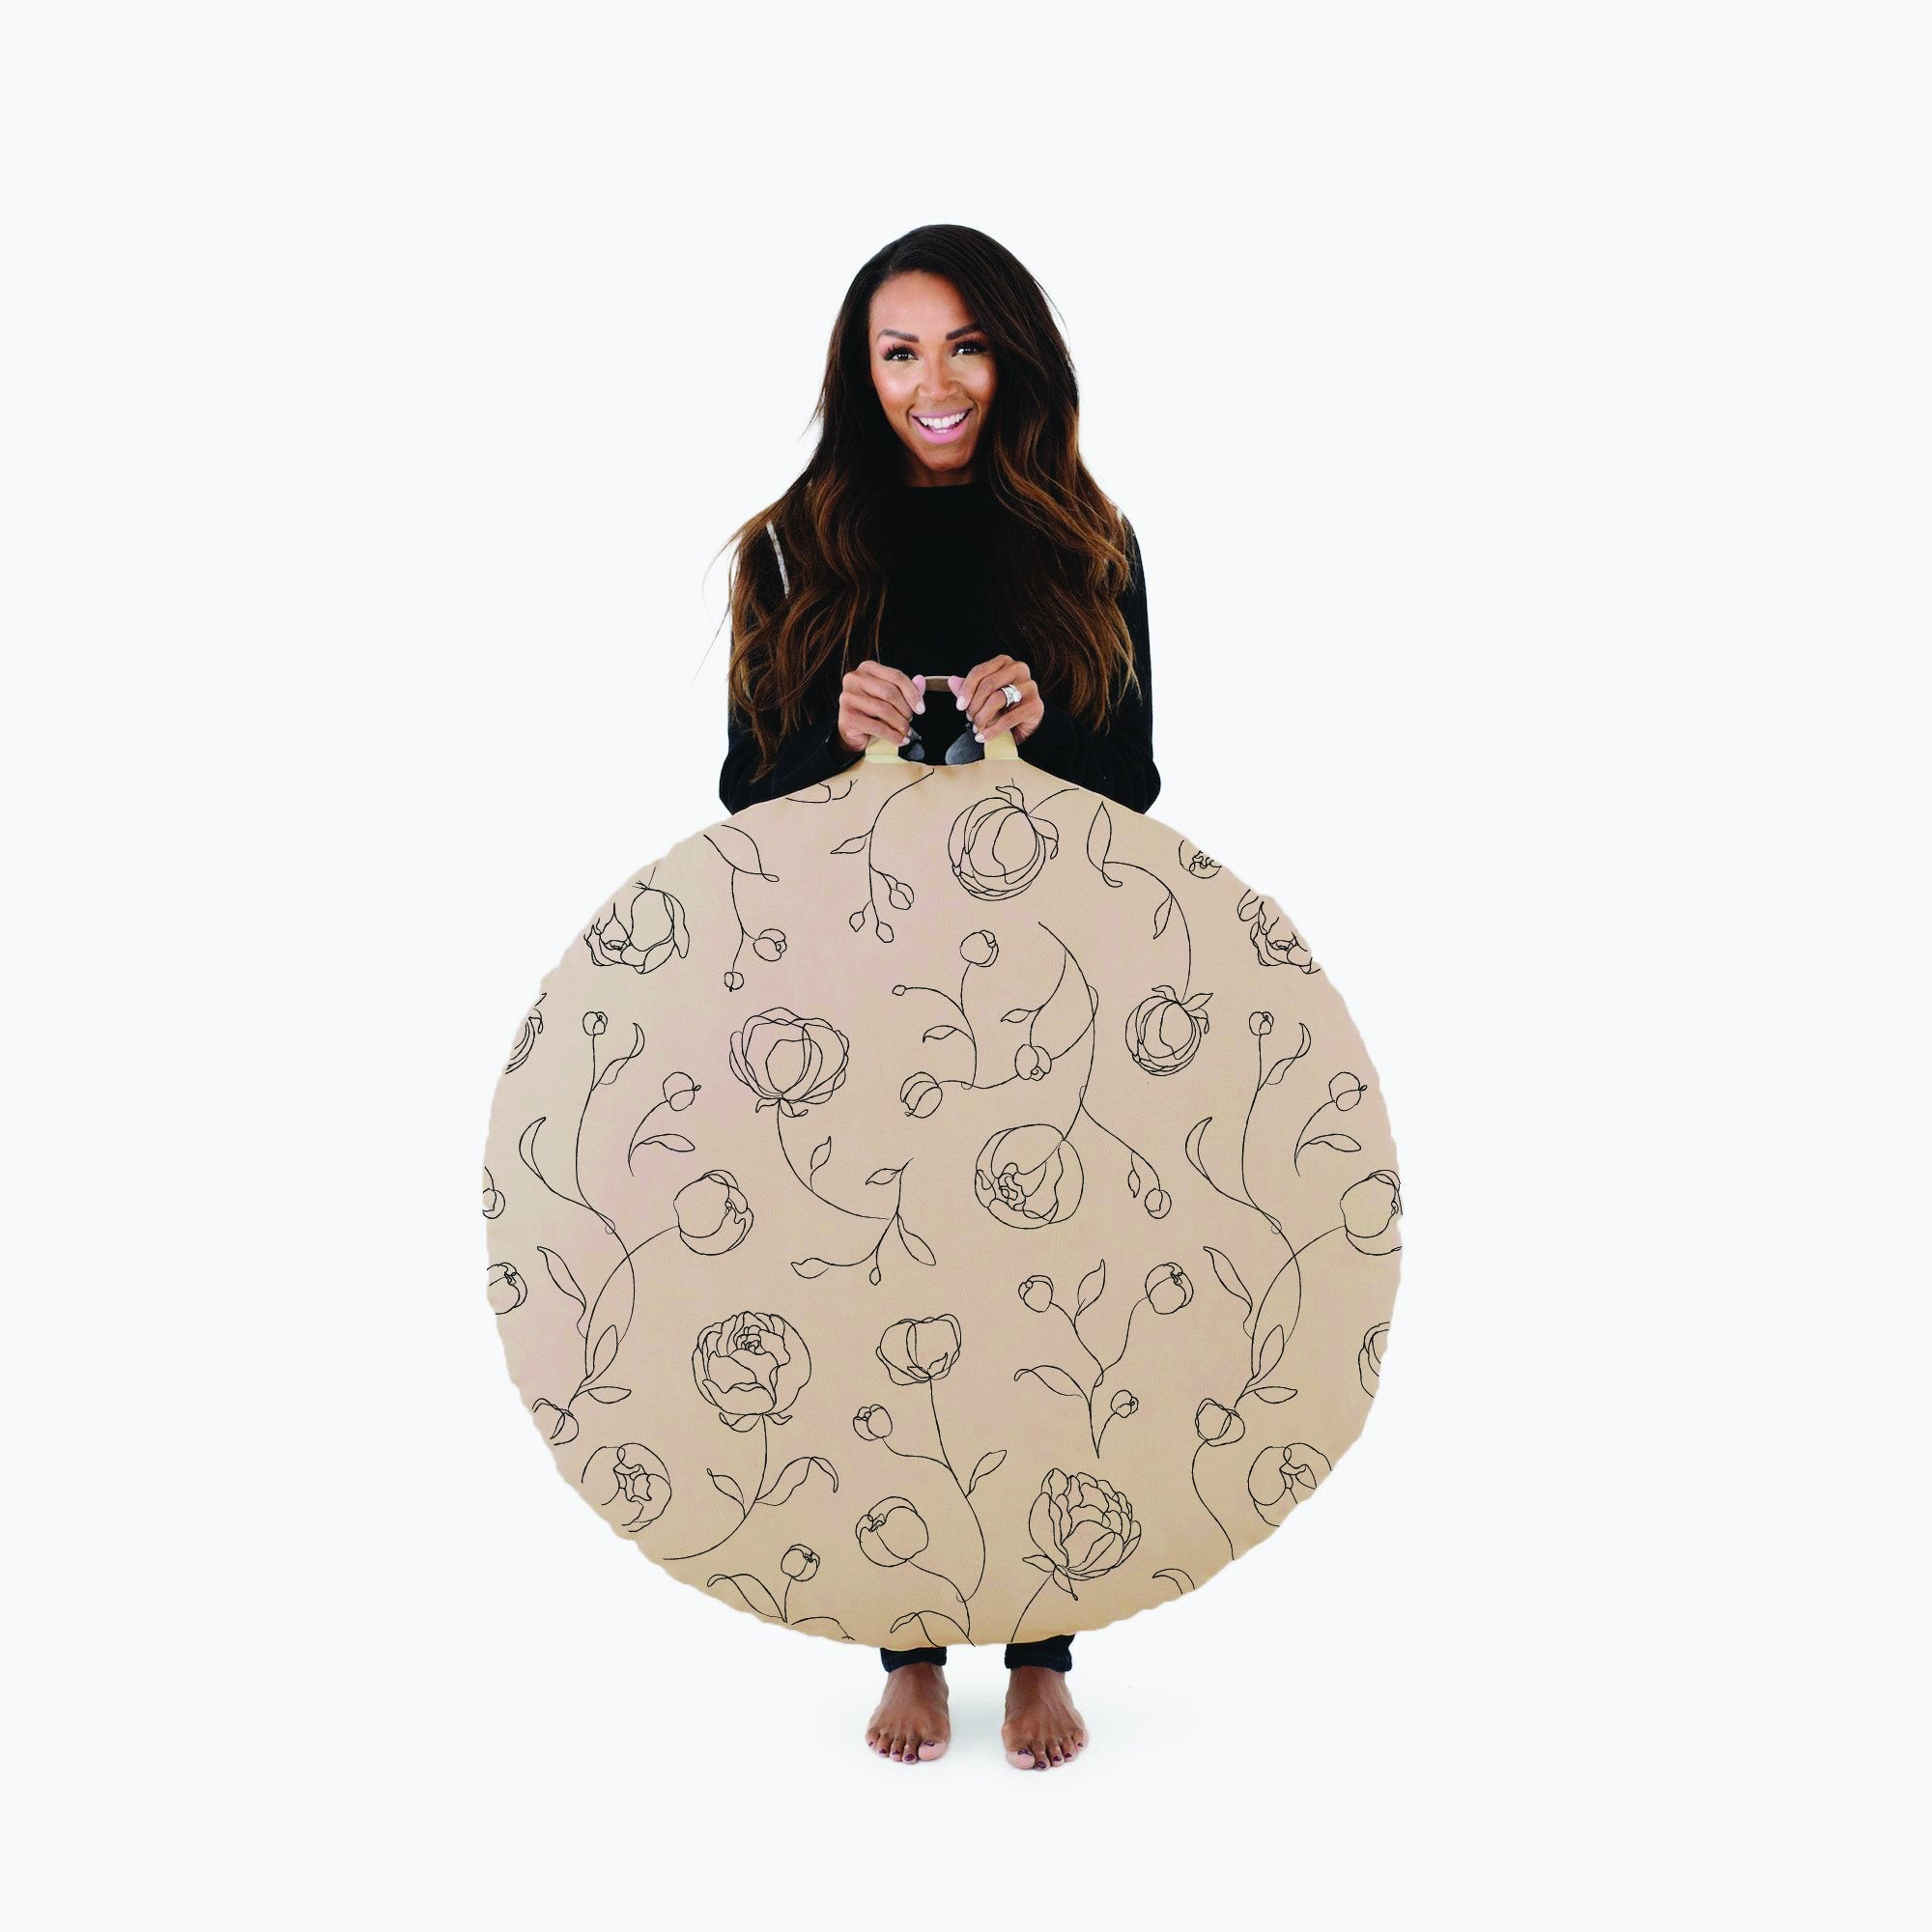 Peony (on sale) / Circle@Woman holding the Peony Circle Floor Cushion